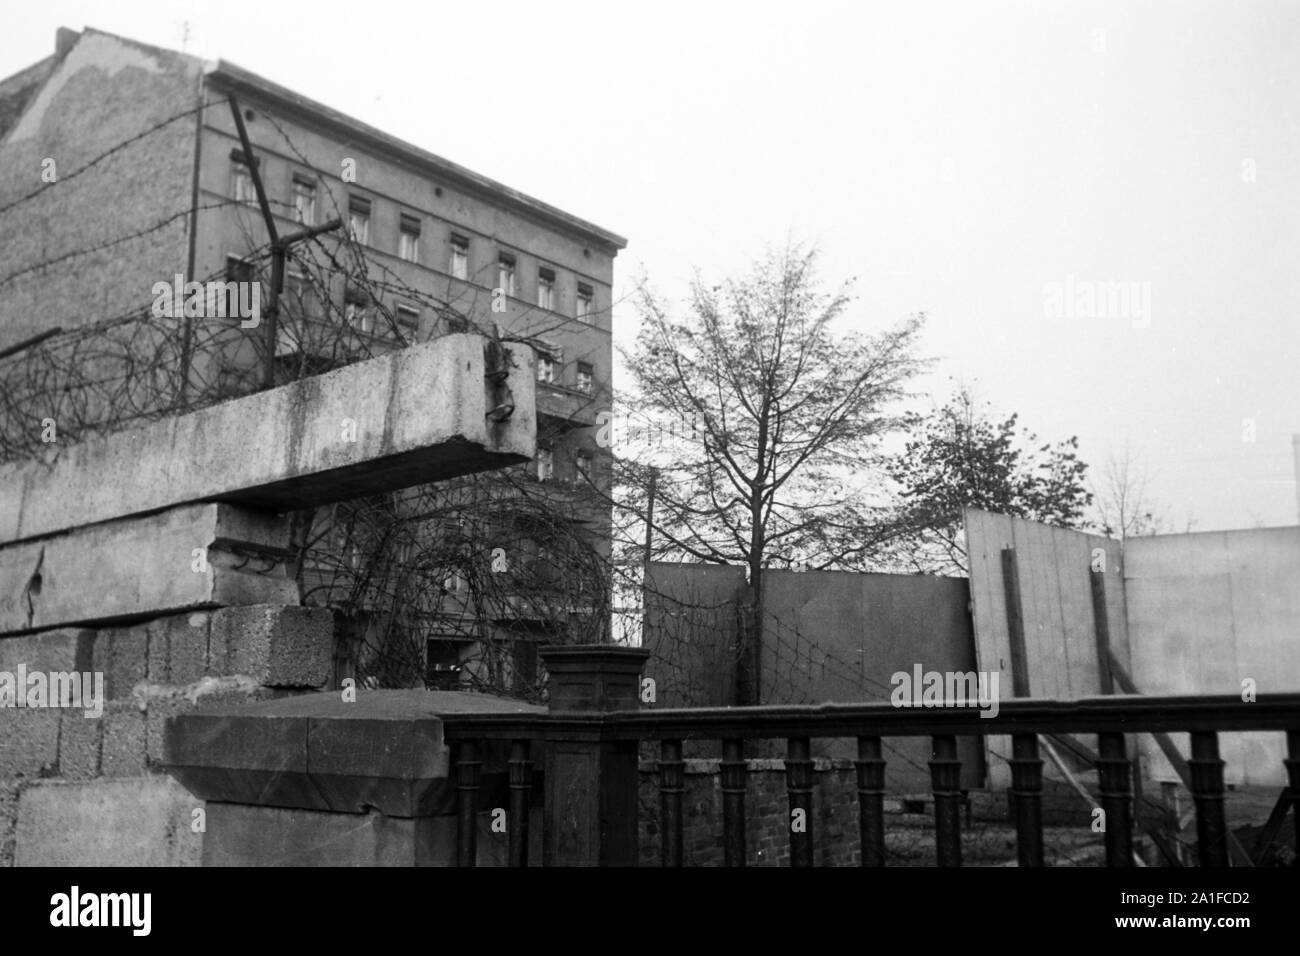 Sichtschutz an der Grenze des amerikanischen Sektors in Berlin, Deutschland 1962. Blind at the border of the American sector in Berlin, Germany 1962. Stock Photo